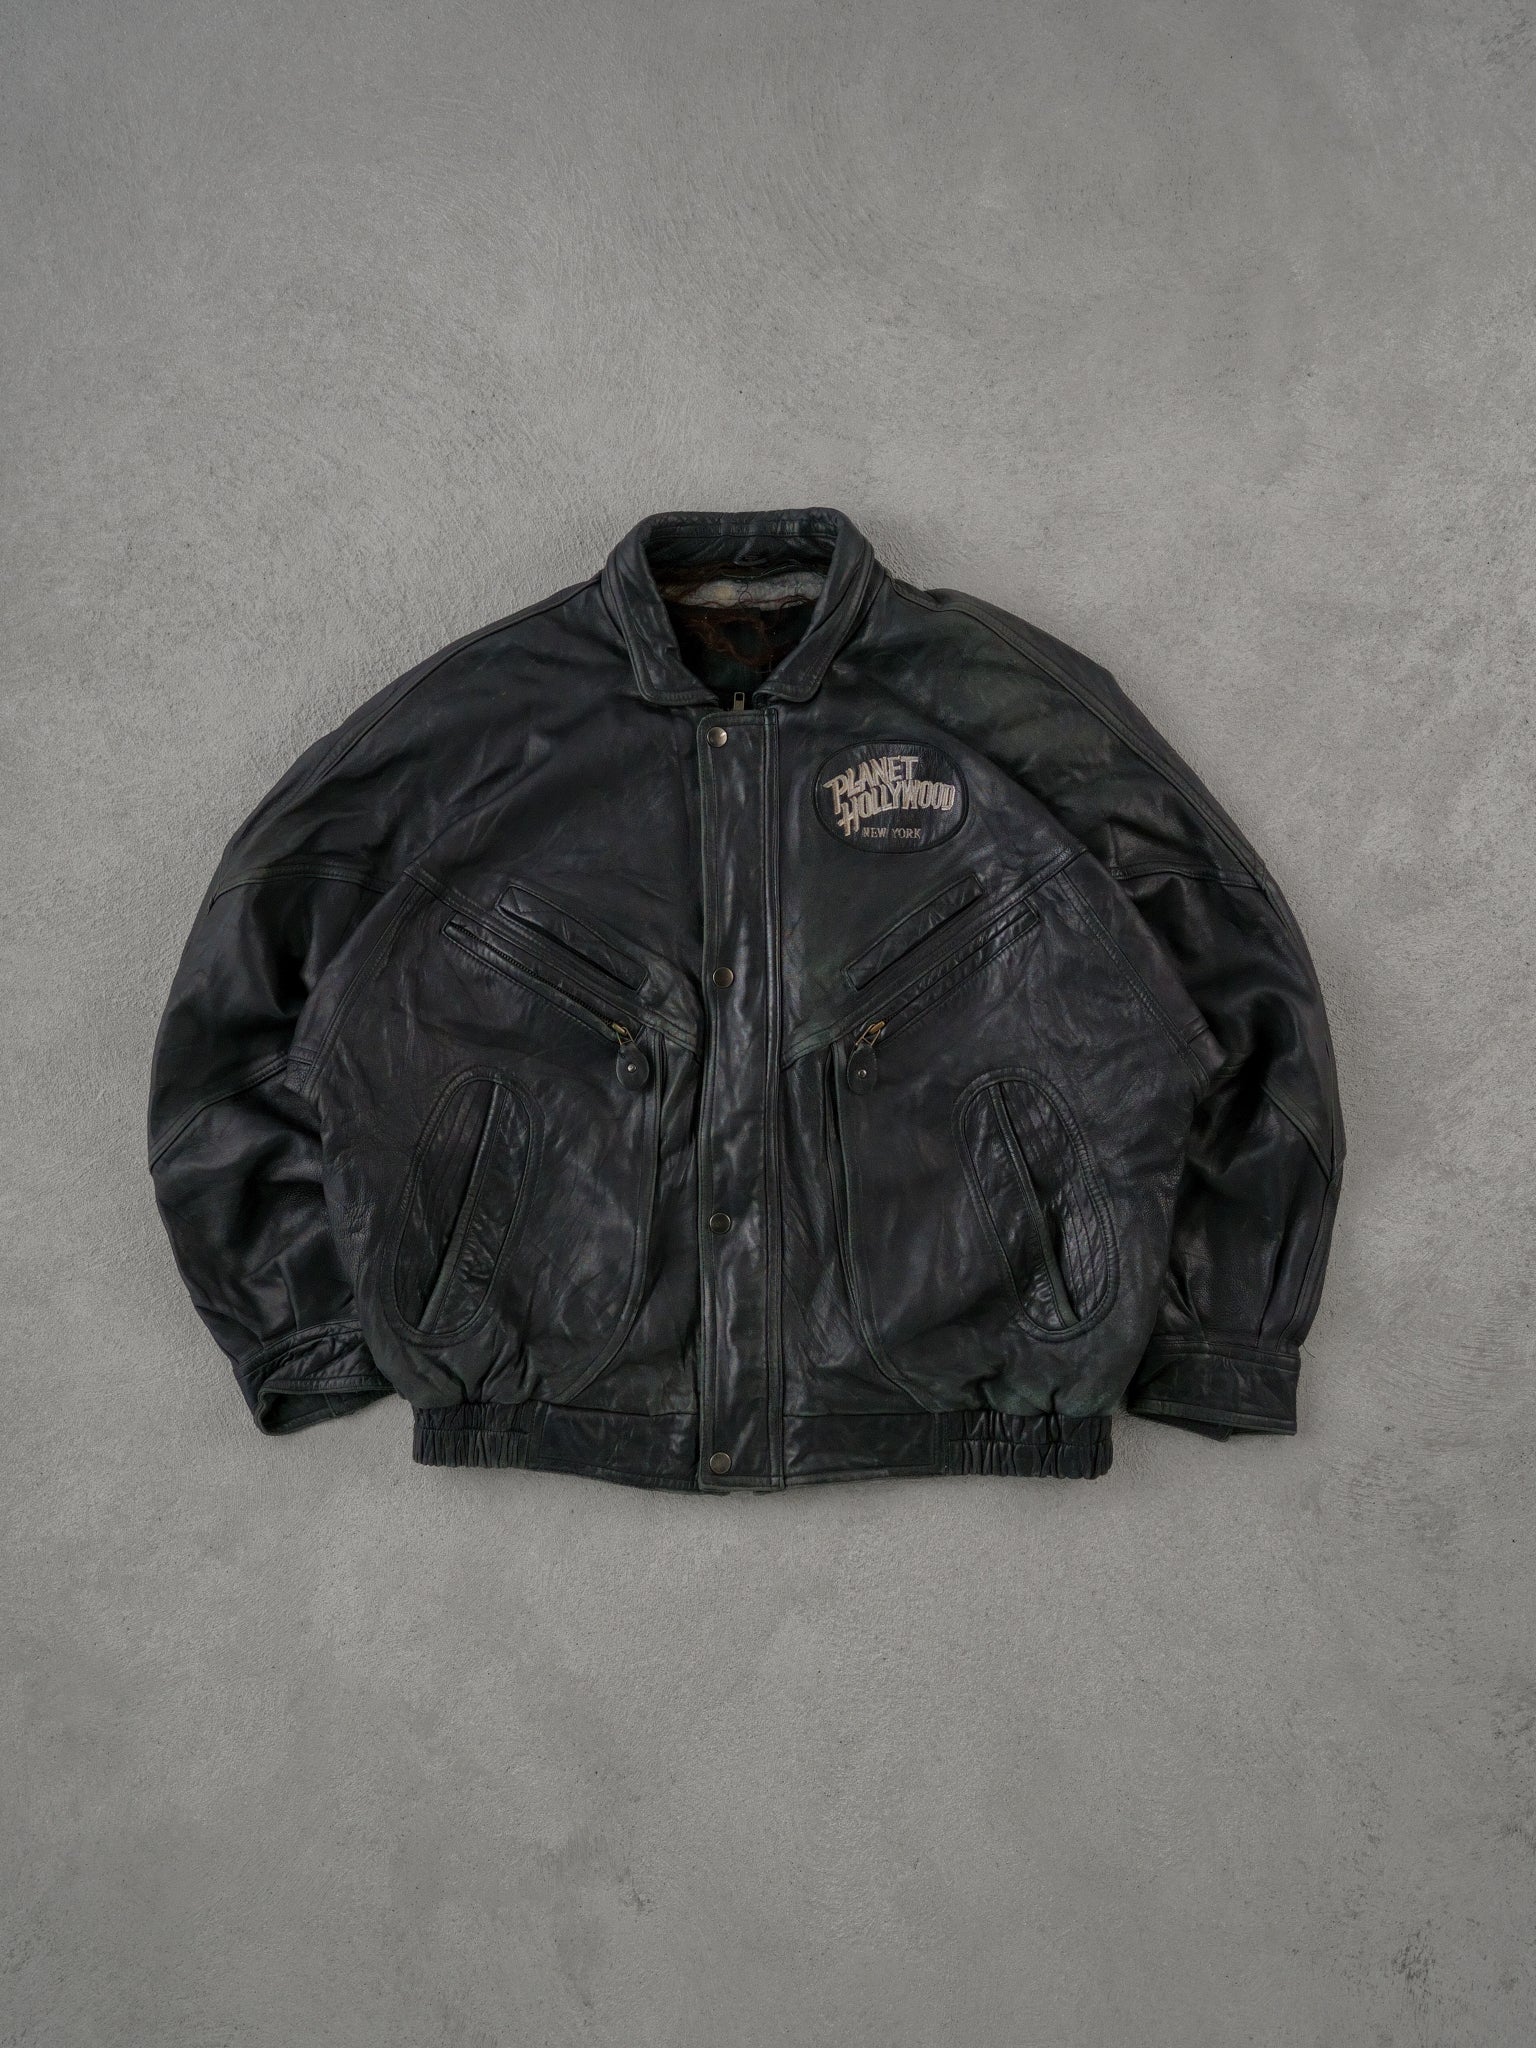 Vintage 90s Black Planet Hollywood New York Leather Jacket (XL)